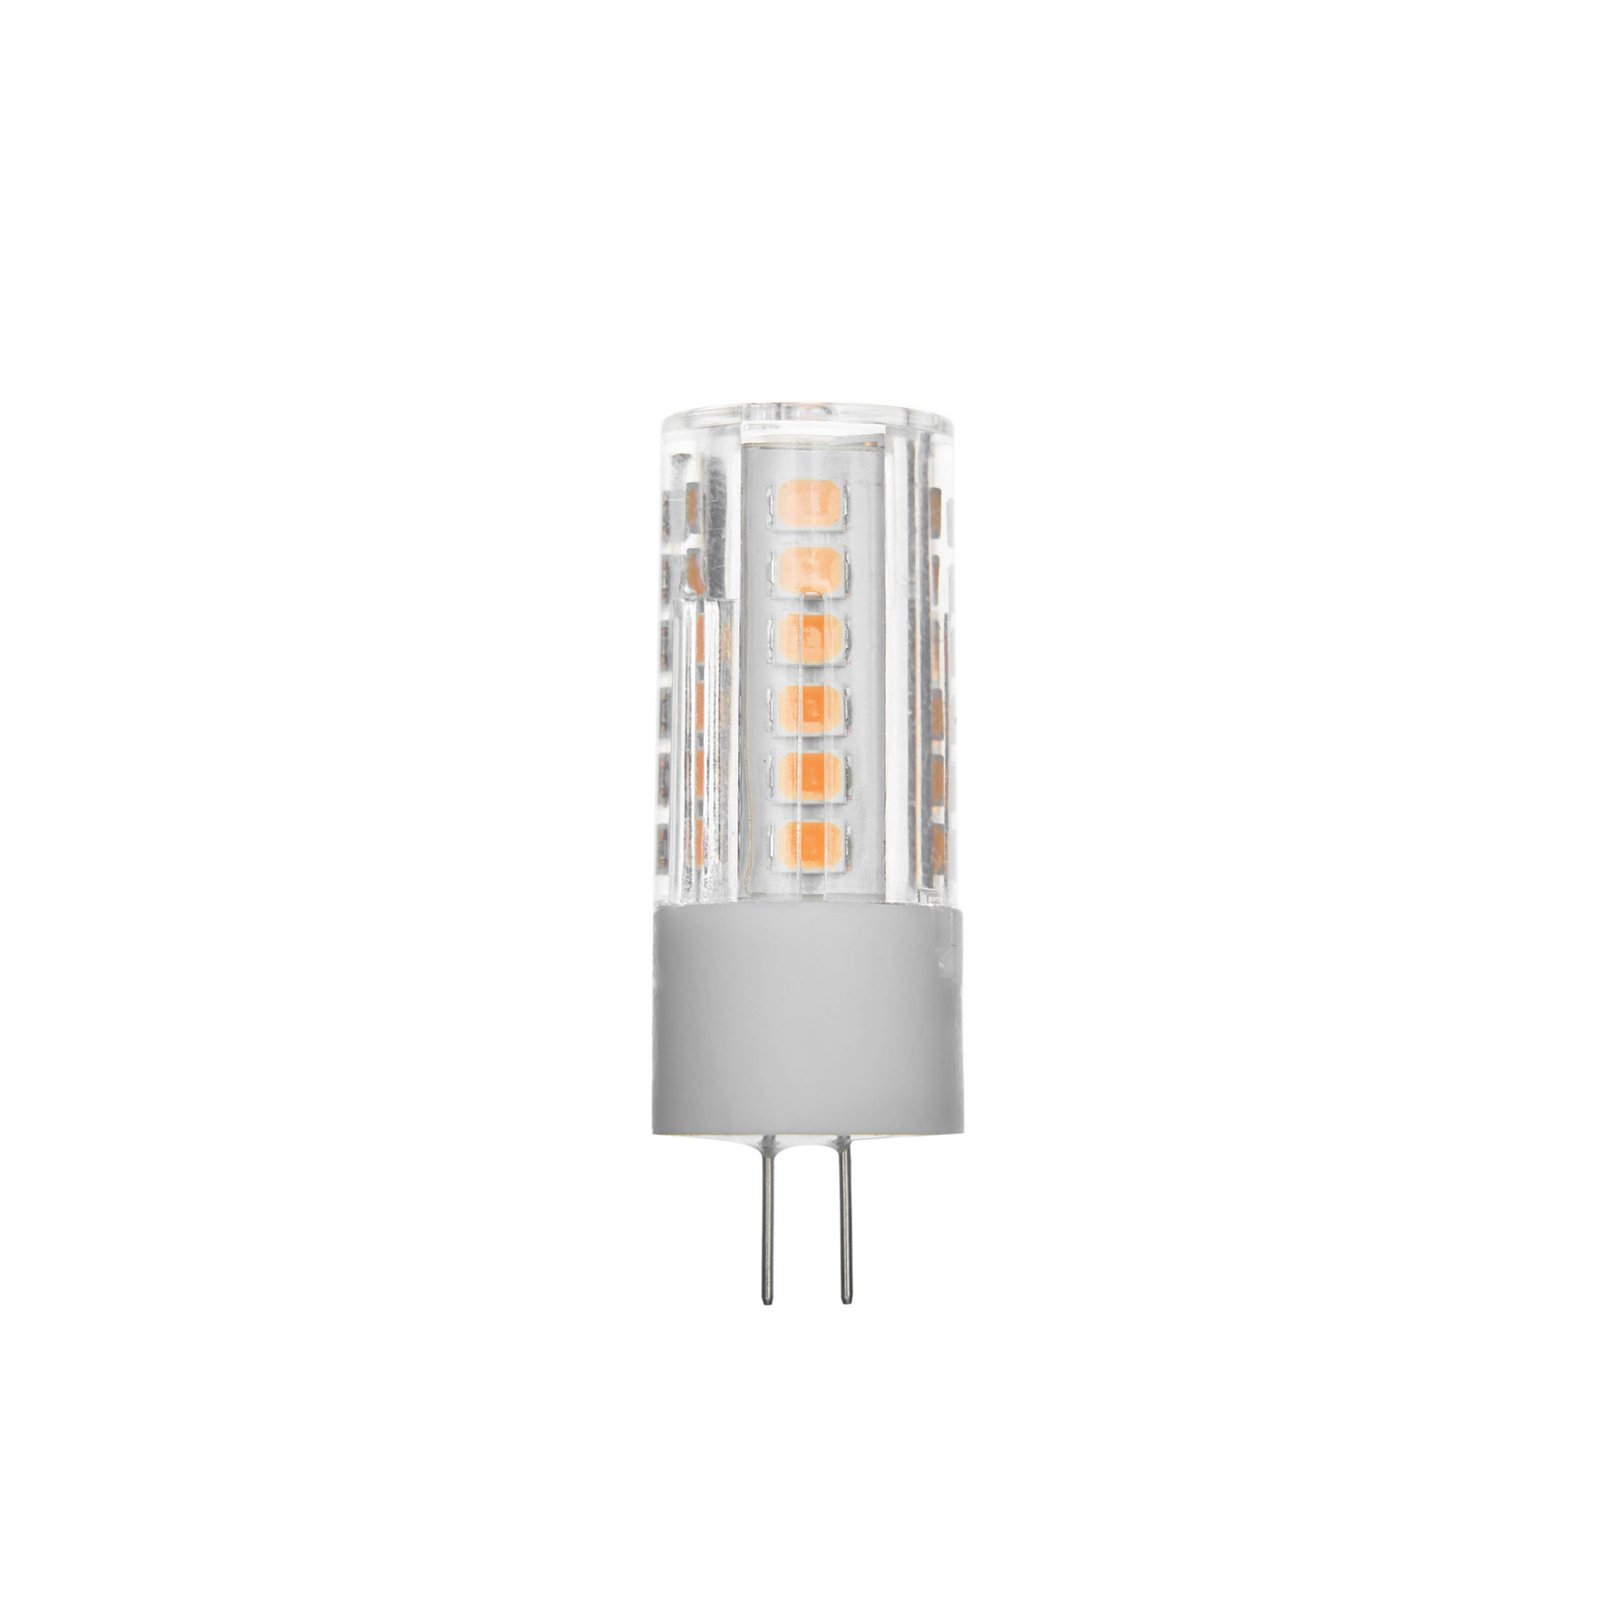 Arcchio LED-Stiftsockellampe G4 3,4W 2.700K 2er